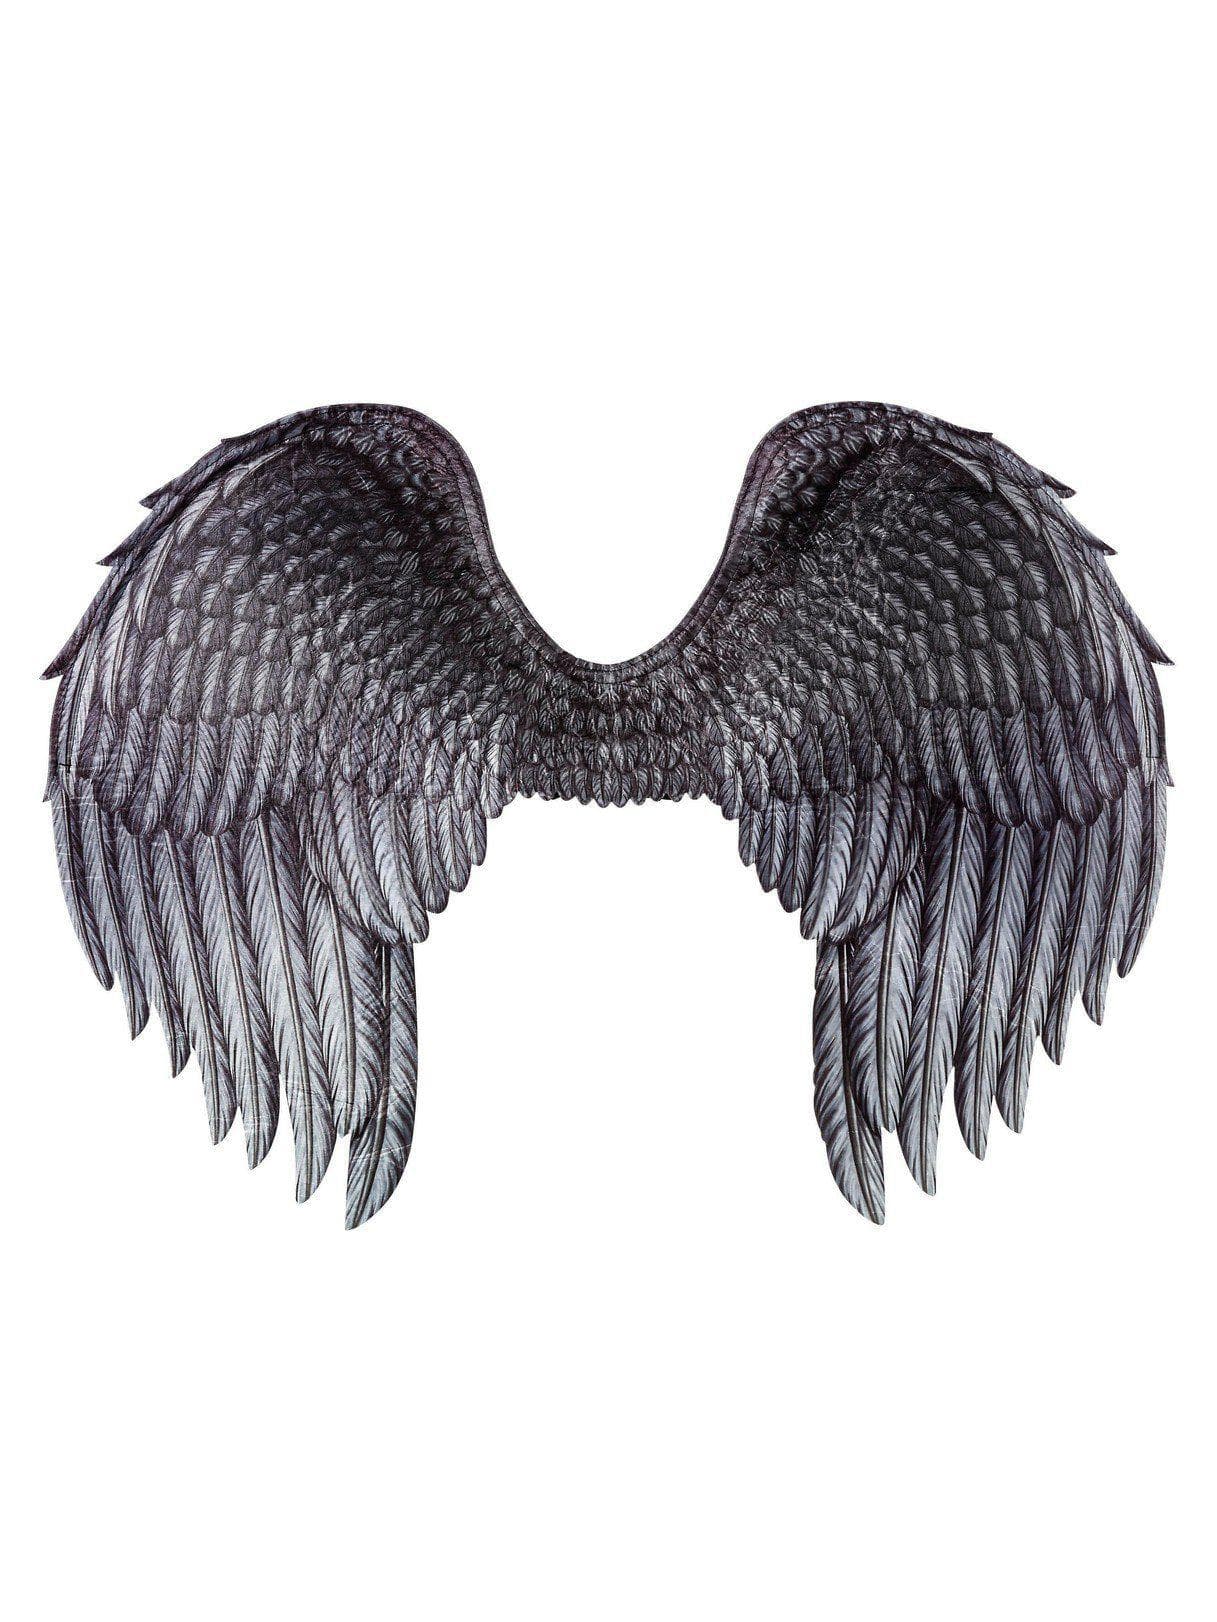 Adult Black Death Angel Wings - costumes.com